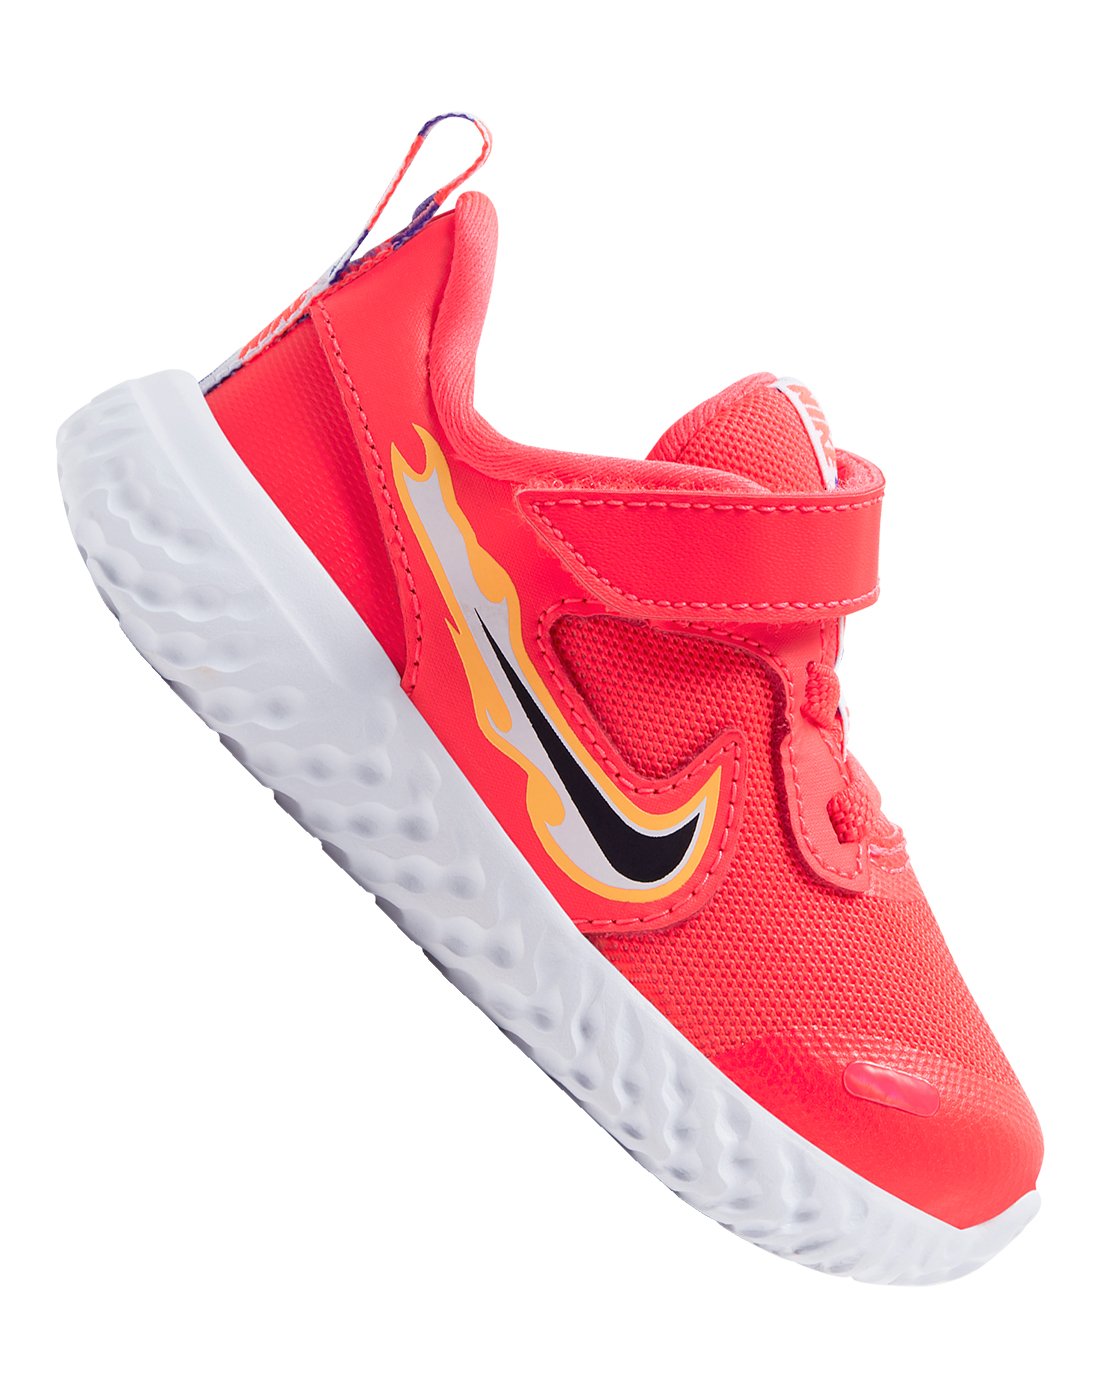 Nike Kids Revolution 5 Fire Shoes in Laser CrimsonOpti YellowLaser OrangeDark Smoke Grey.jpg